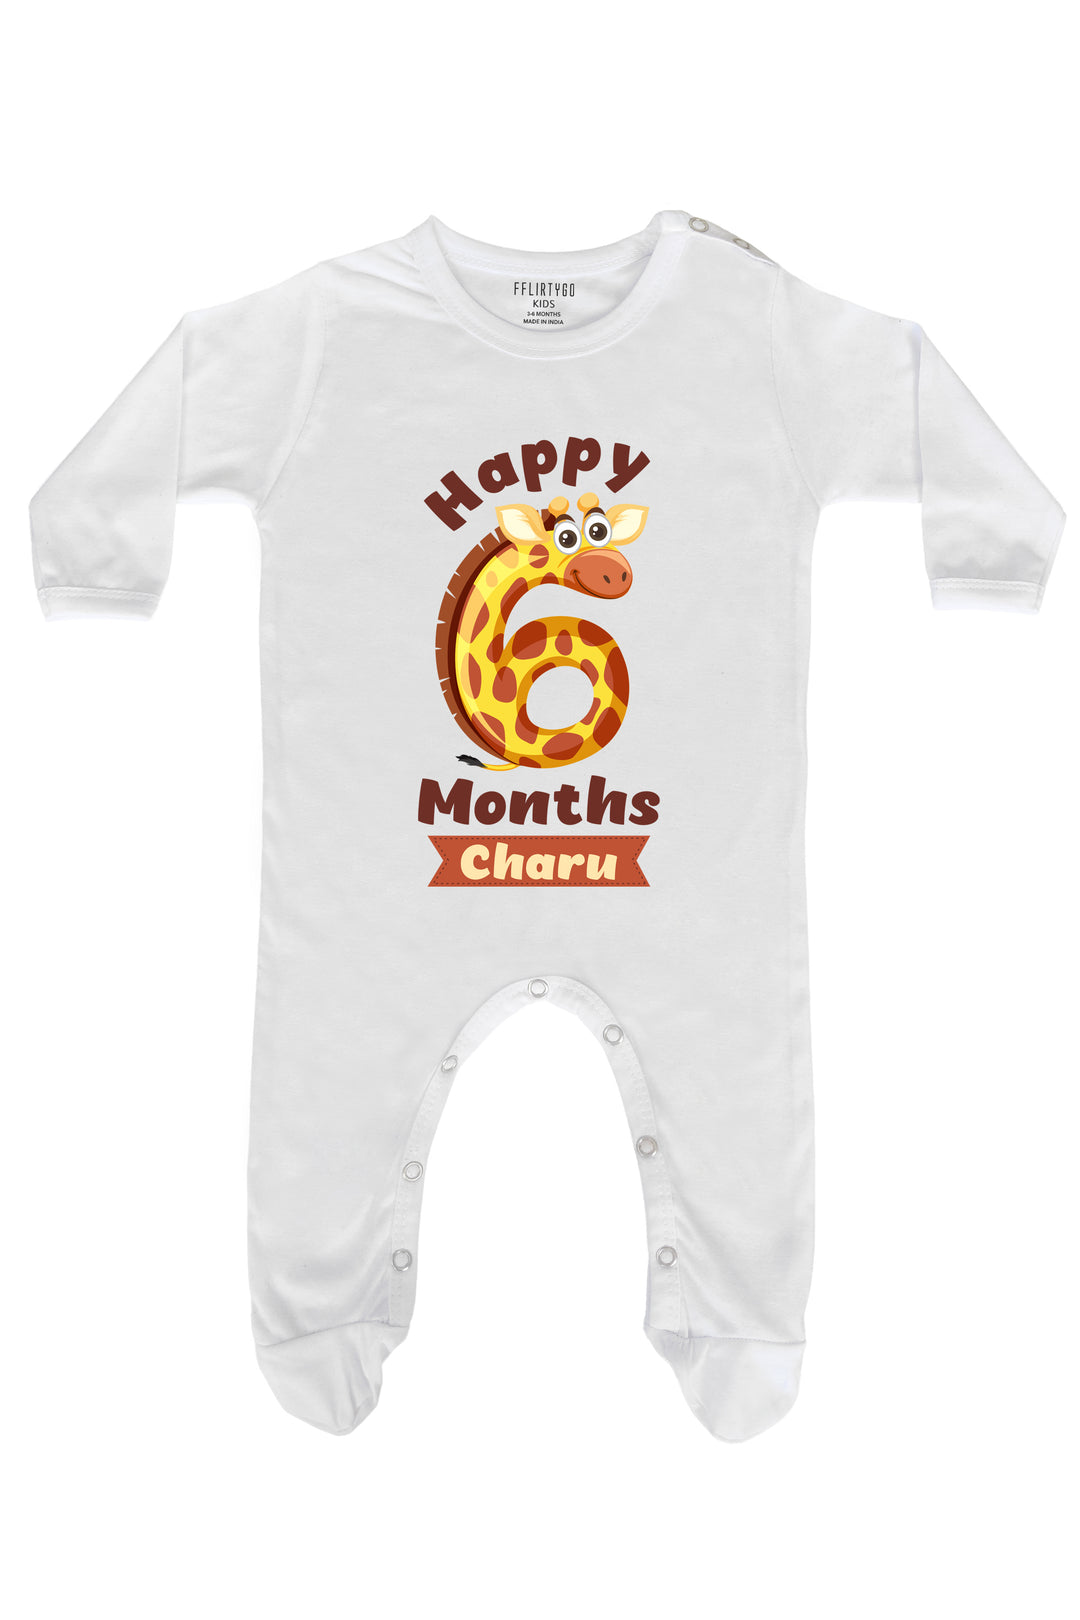 Six Month Milestone Baby Romper | Onesies w/ Custom Name